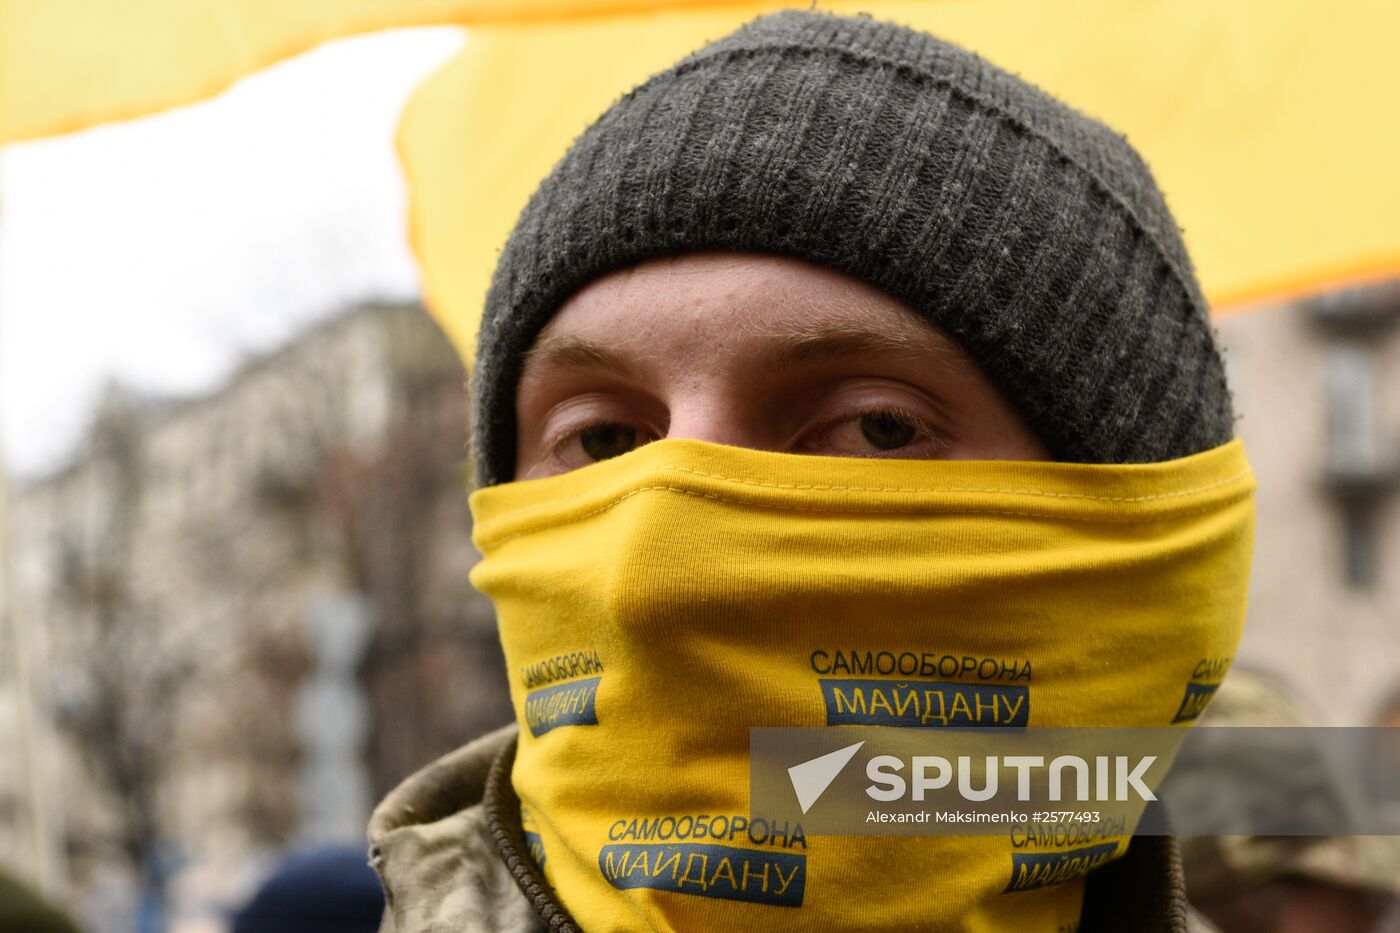 "Dignity March" in Kiev